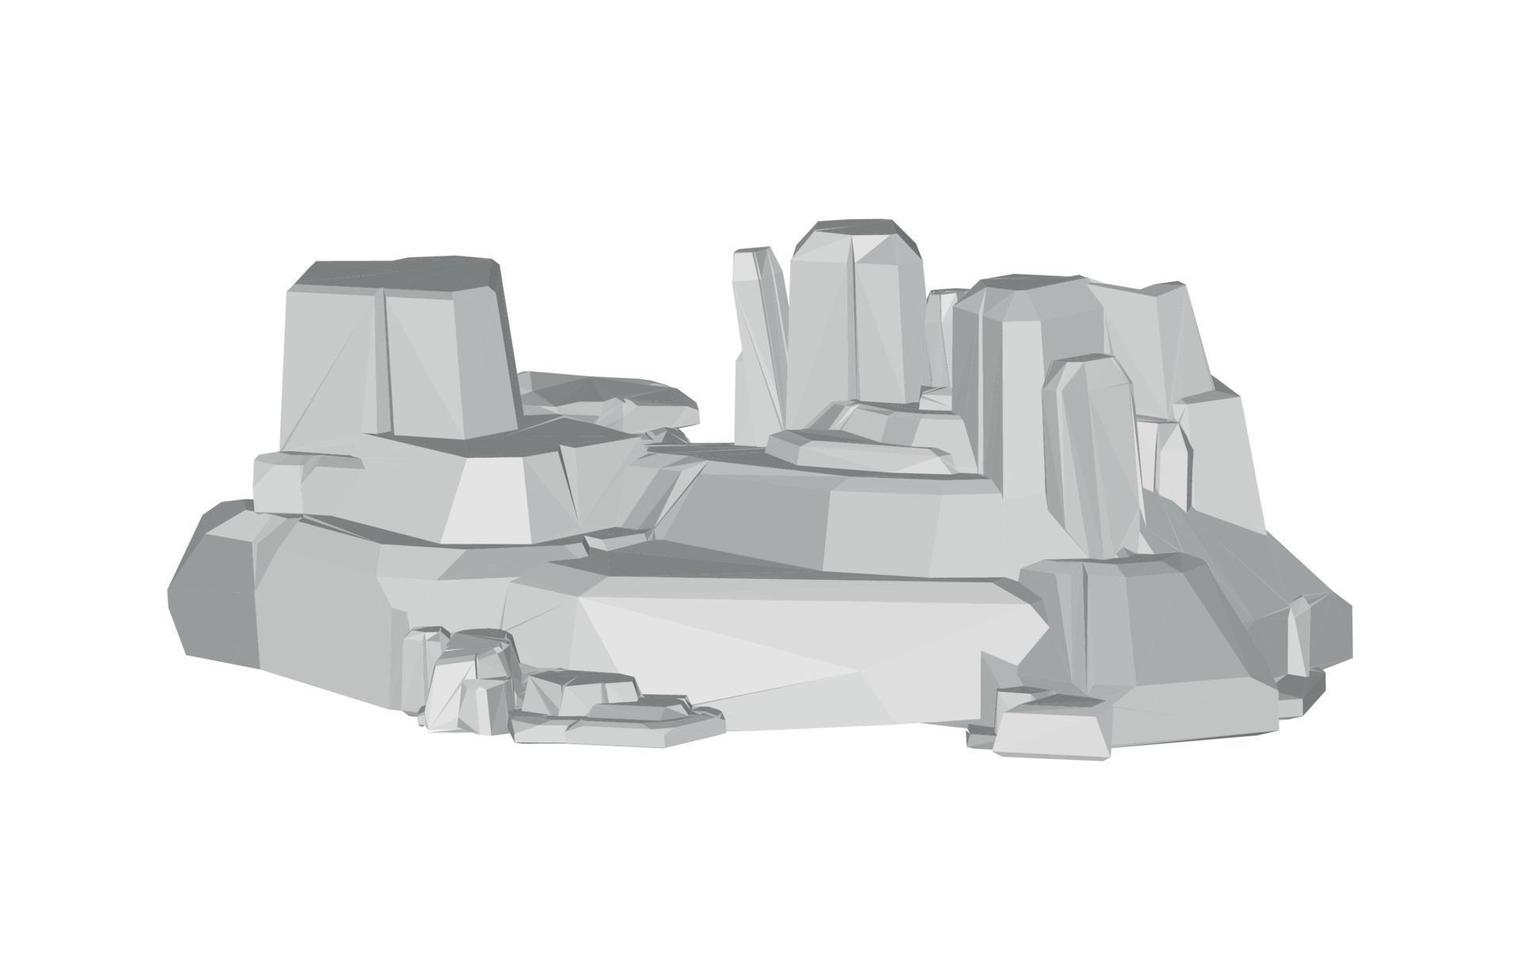 vektor illustration av 3d sten